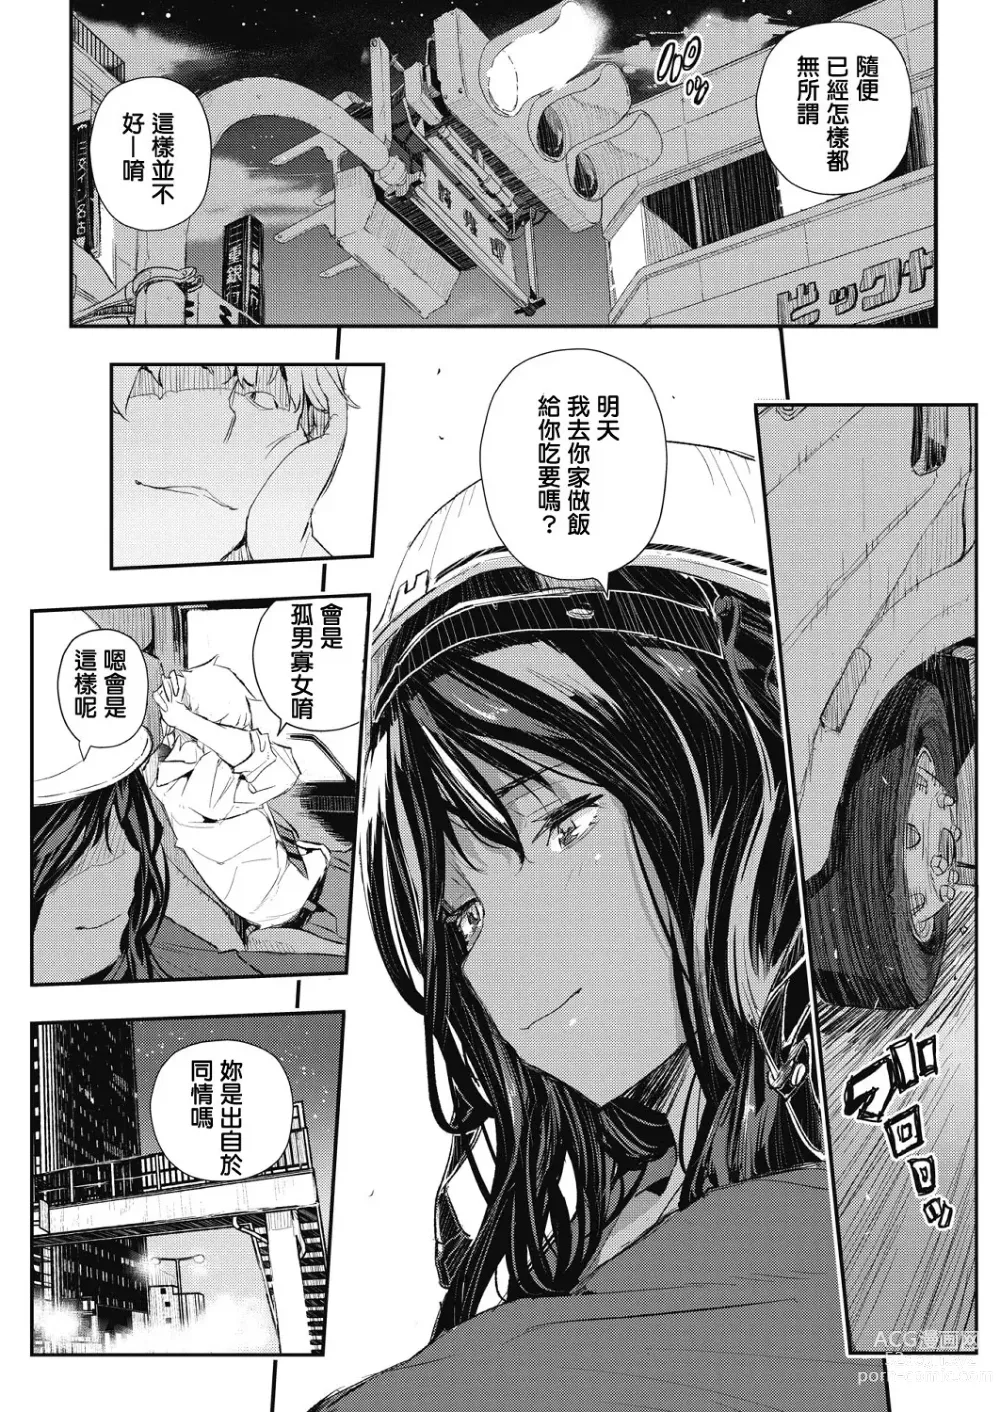 Page 9 of manga Hairan Yu-gi